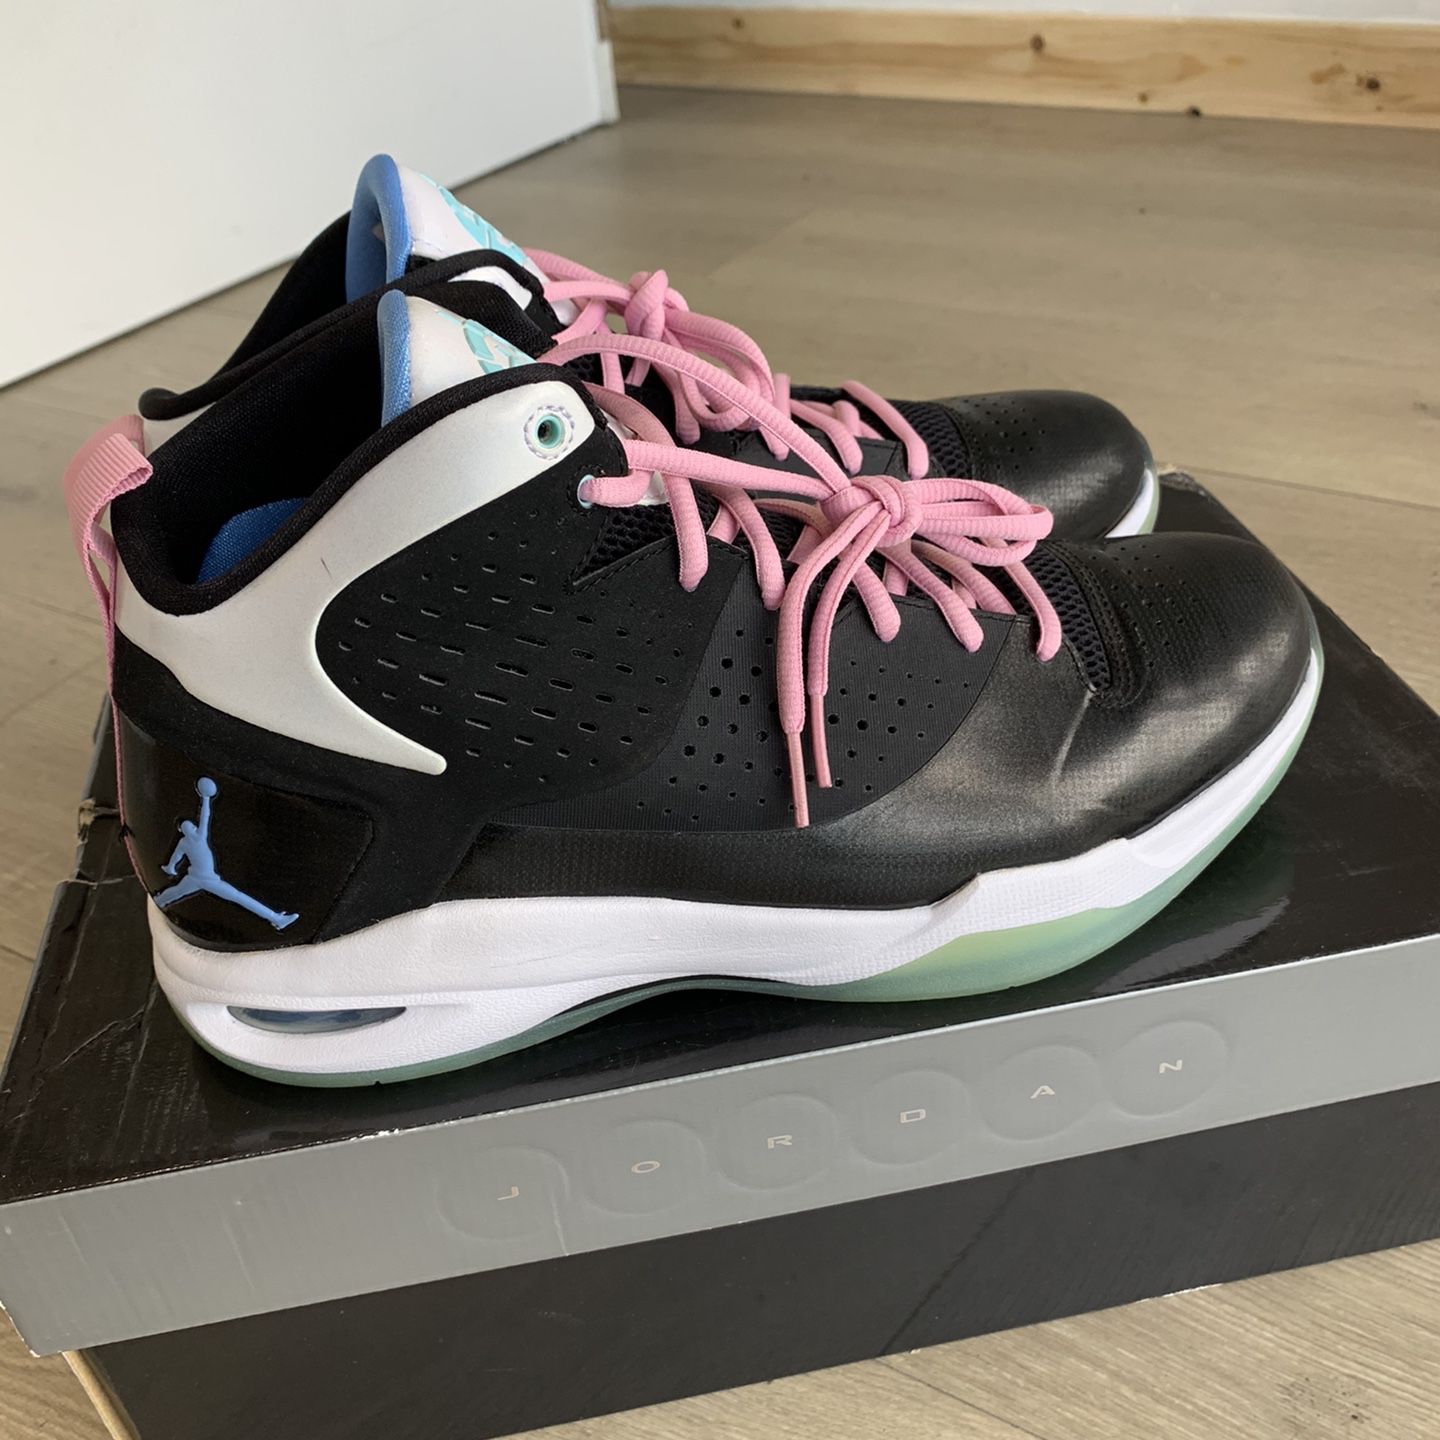 DS Brand New Nike Air Jordan Fly Wade men’s sneakers size 10.5